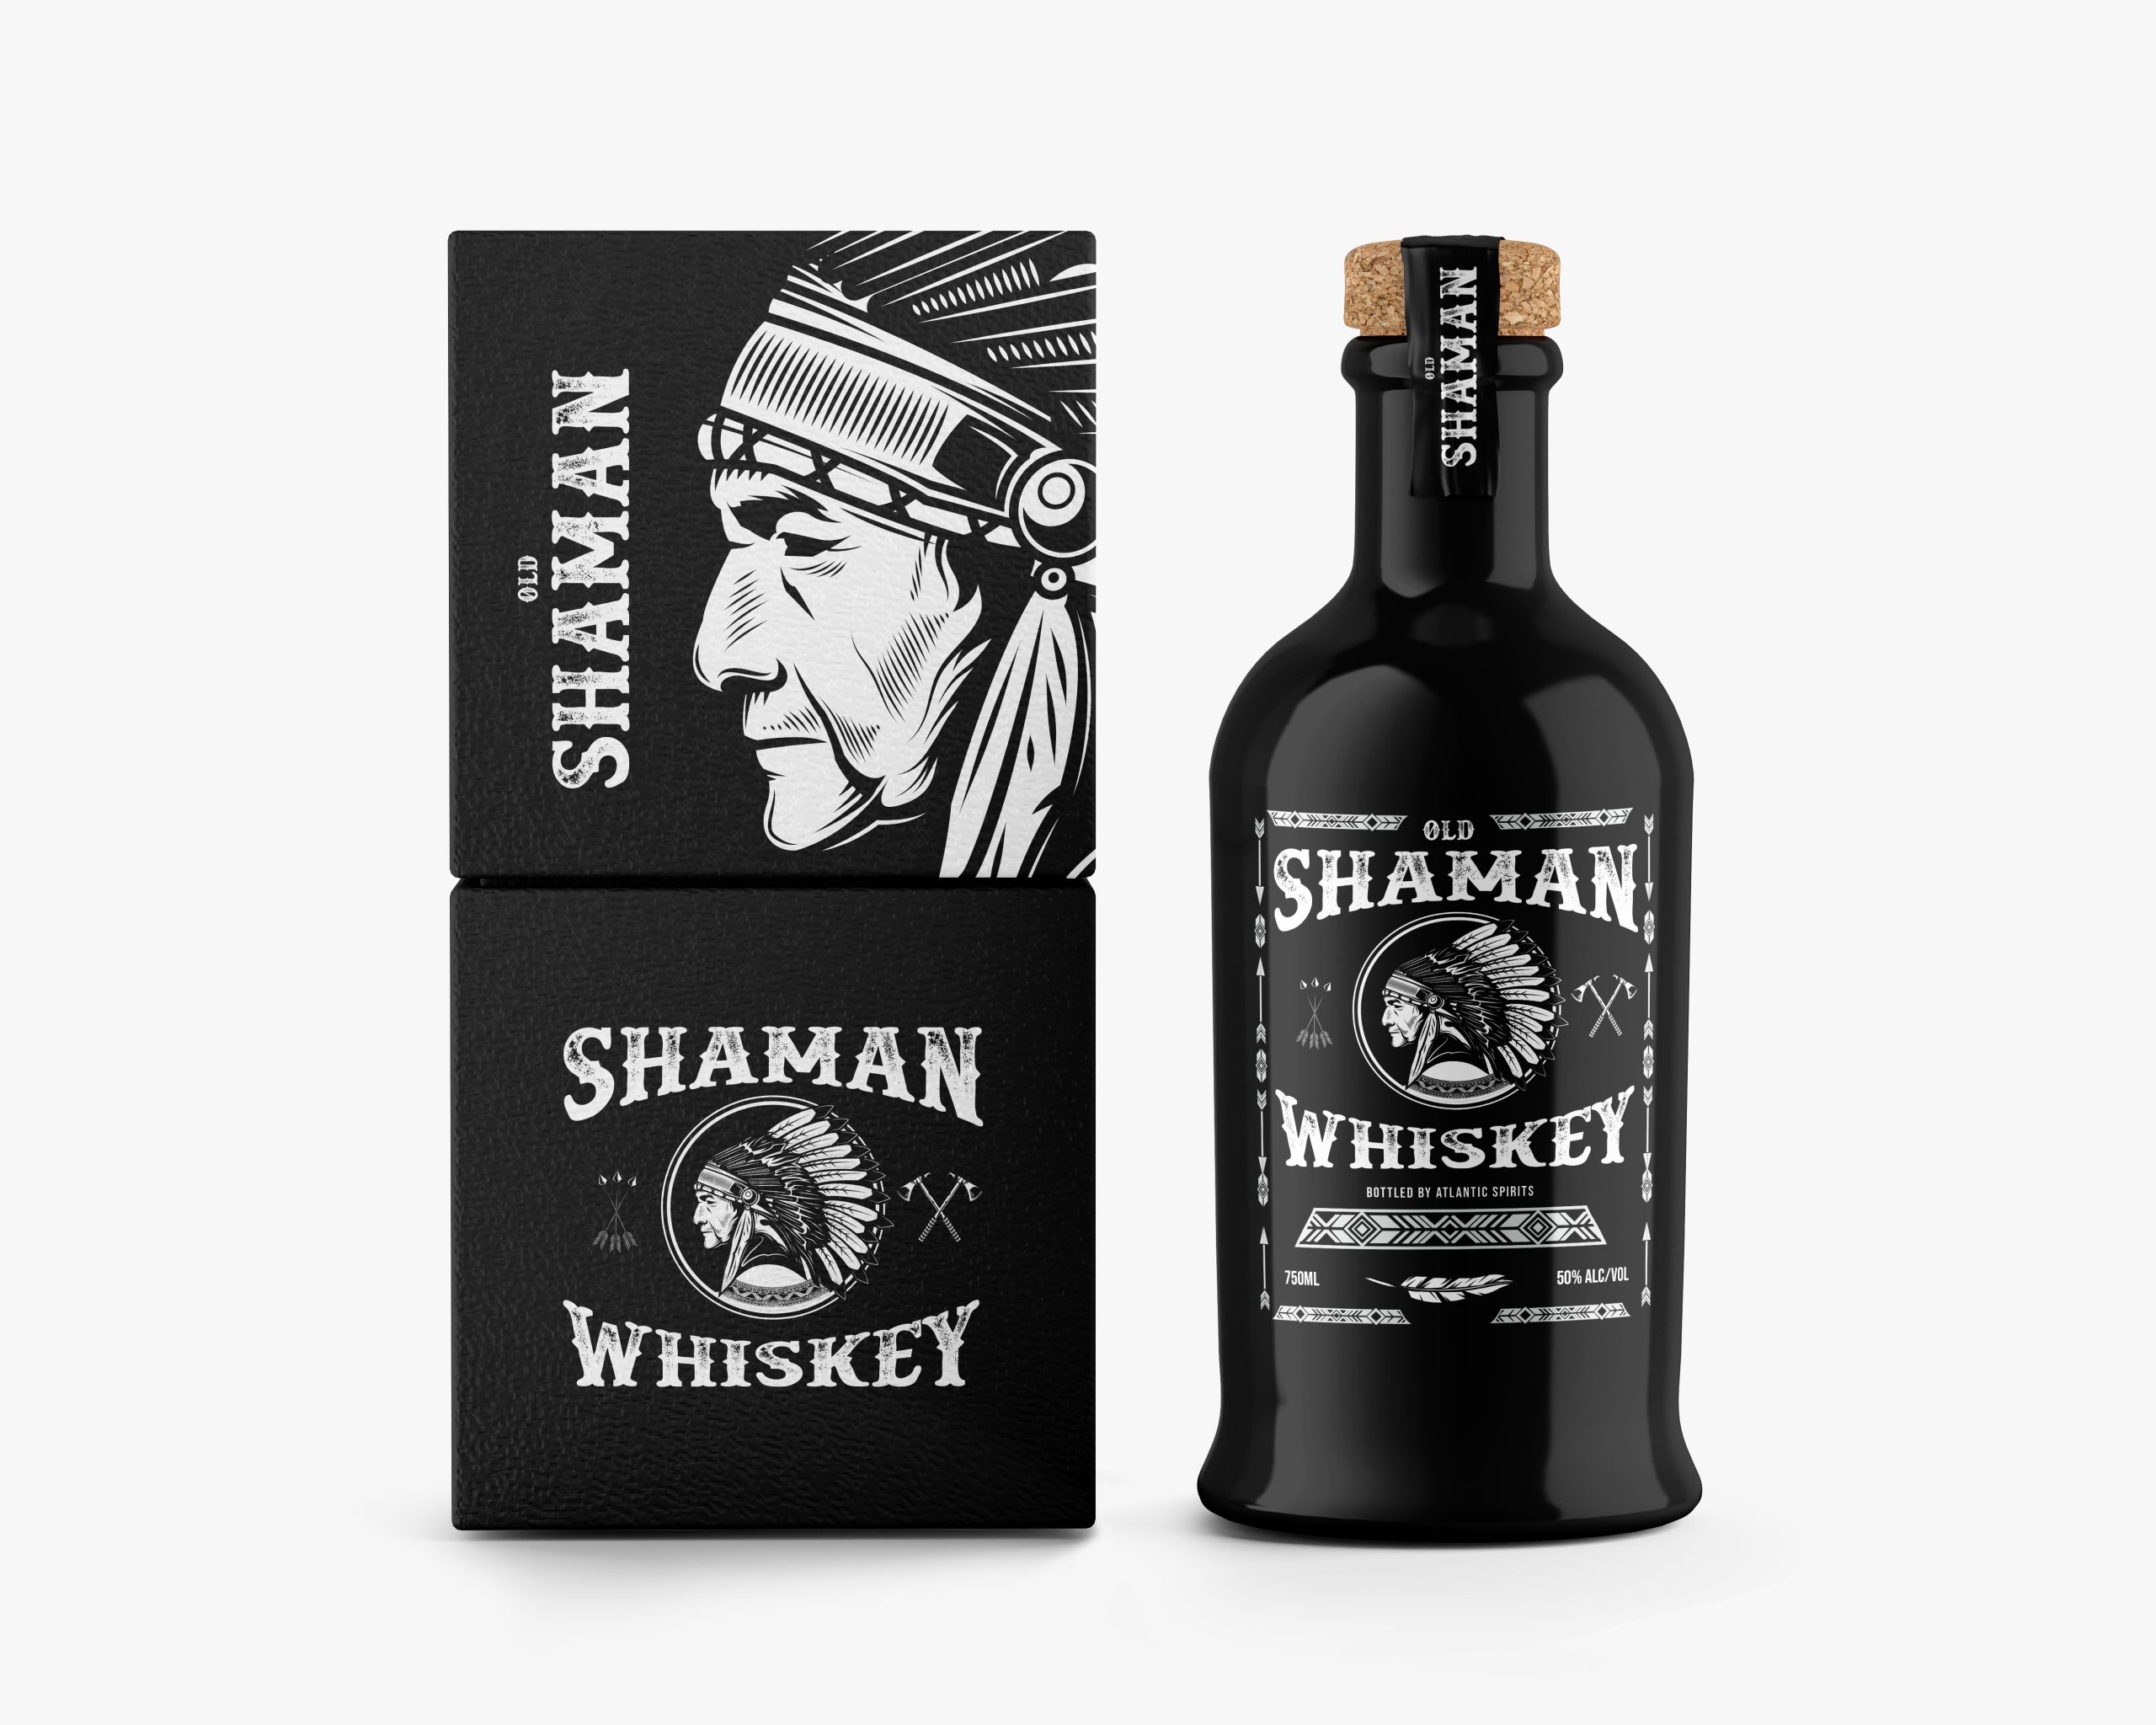 Shaman whiskey